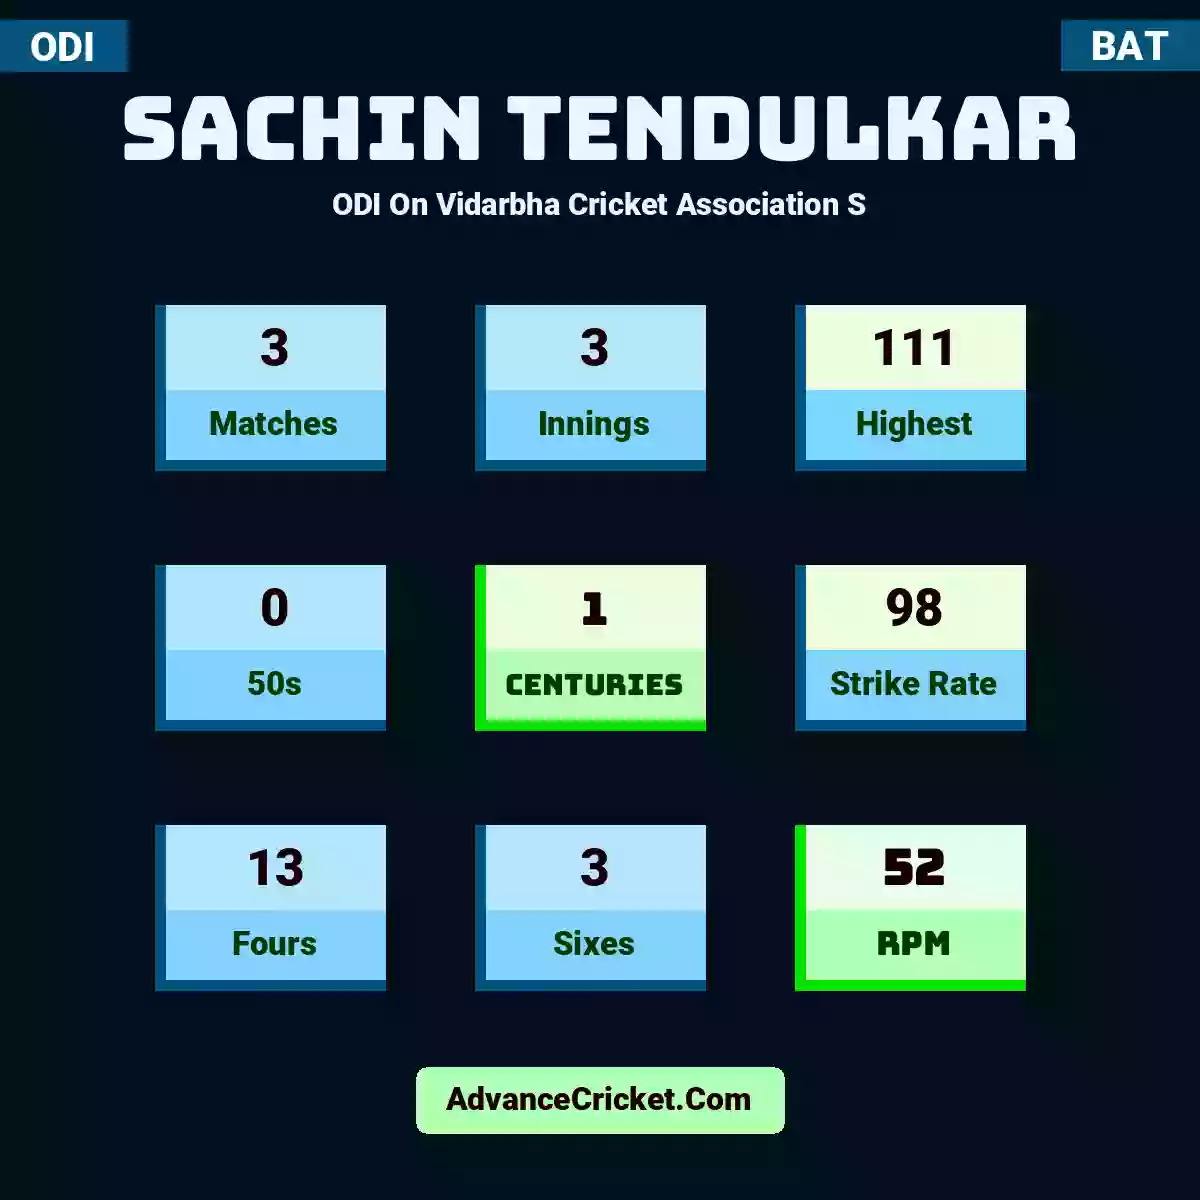 Sachin Tendulkar ODI  On Vidarbha Cricket Association S, Sachin Tendulkar played 3 matches, scored 111 runs as highest, 0 half-centuries, and 1 centuries, with a strike rate of 98. S.Tendulkar hit 13 fours and 3 sixes, with an RPM of 52.